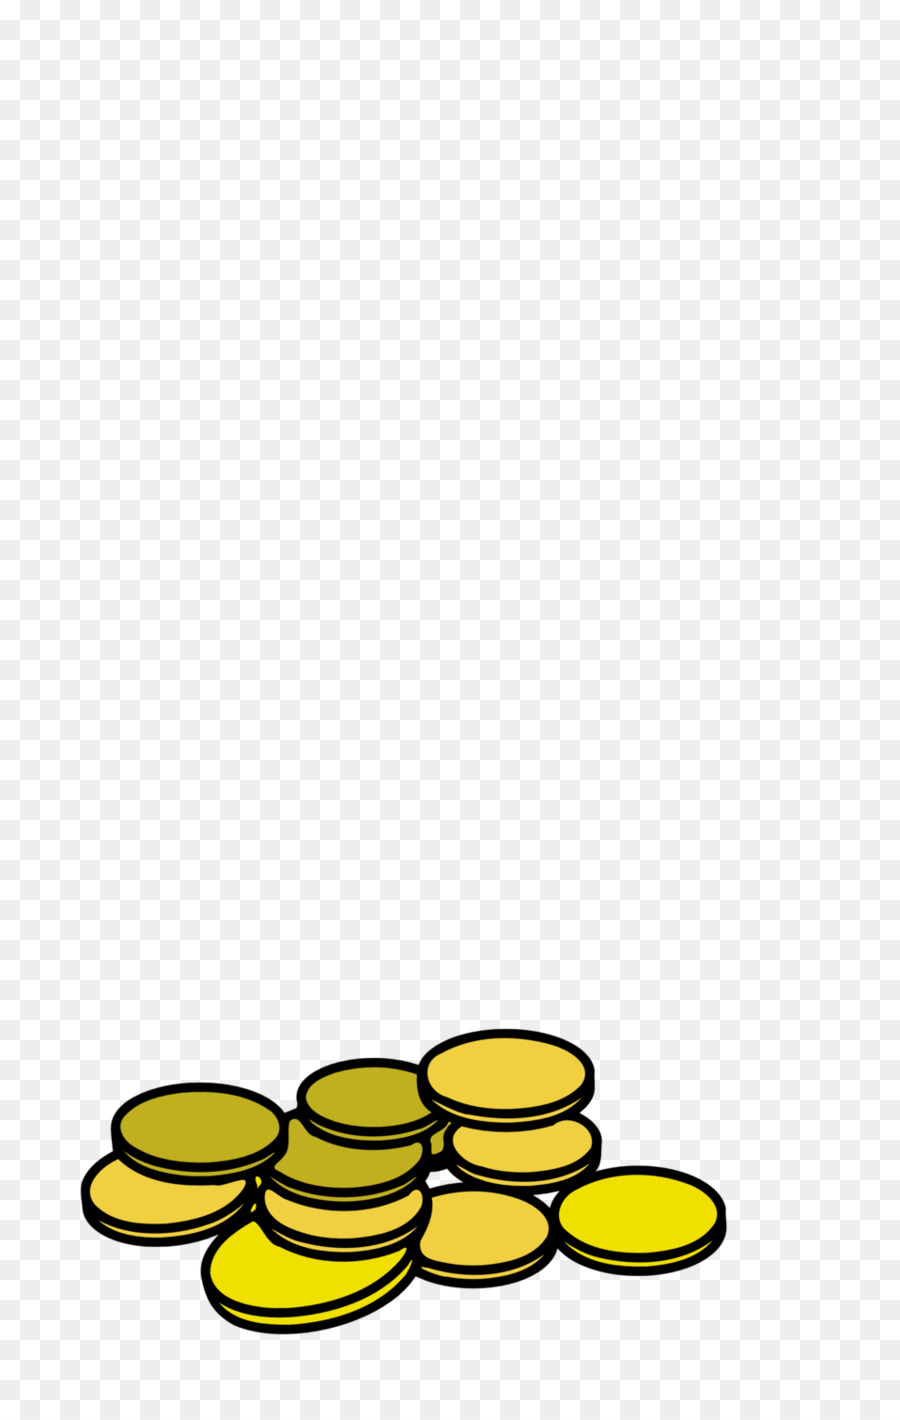 Oro moneta di Bilancio Clip art - moneta stack